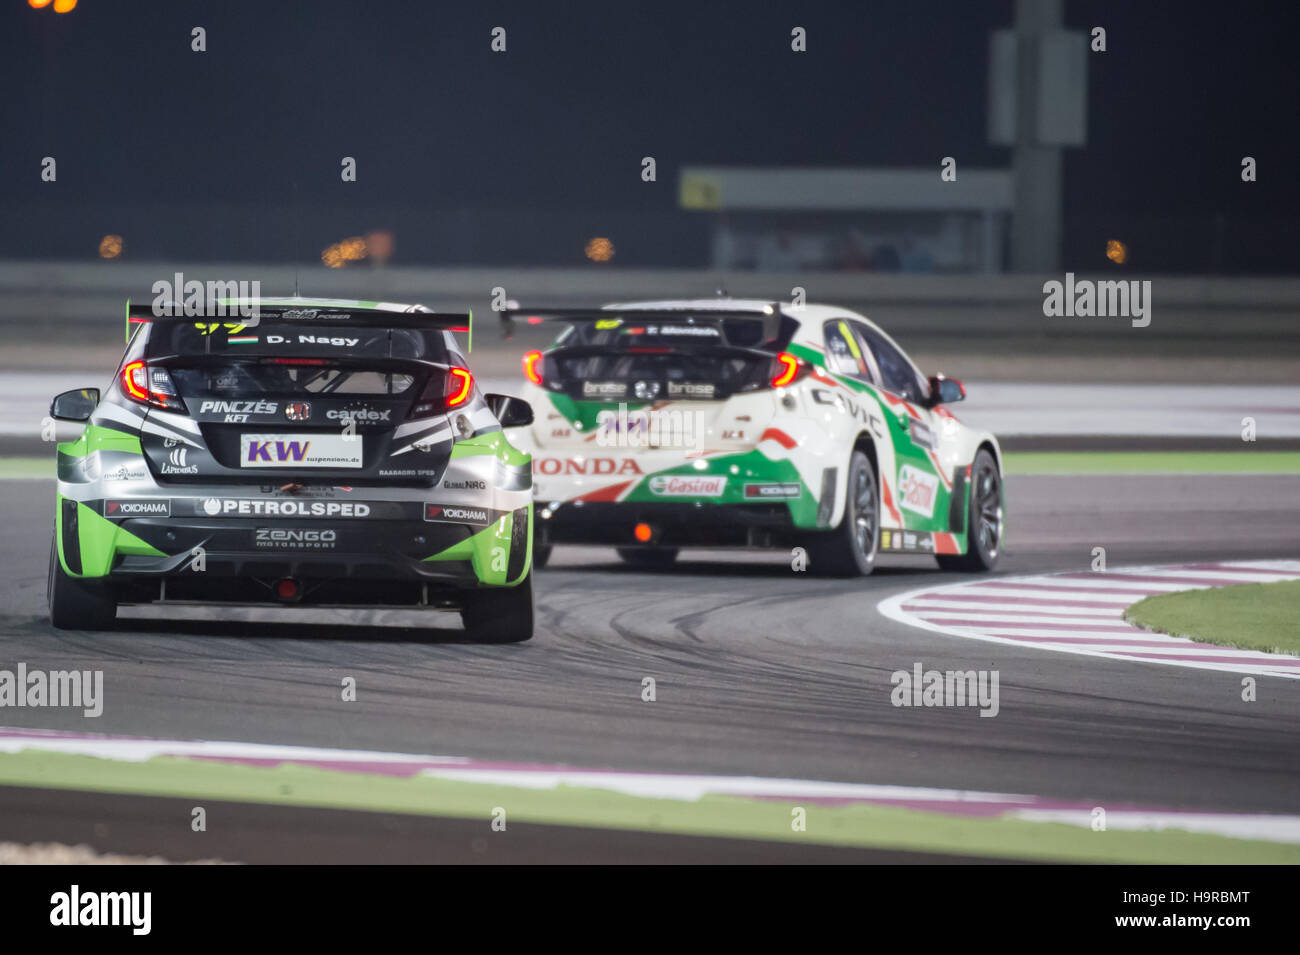 Losail International Circuit, Qatar. 24th Nov 2016. Daniel Nagy during Free Practice 2 during the final round of the FIA WTCC Credit:  Tom Morgan/Alamy Live News Stock Photo